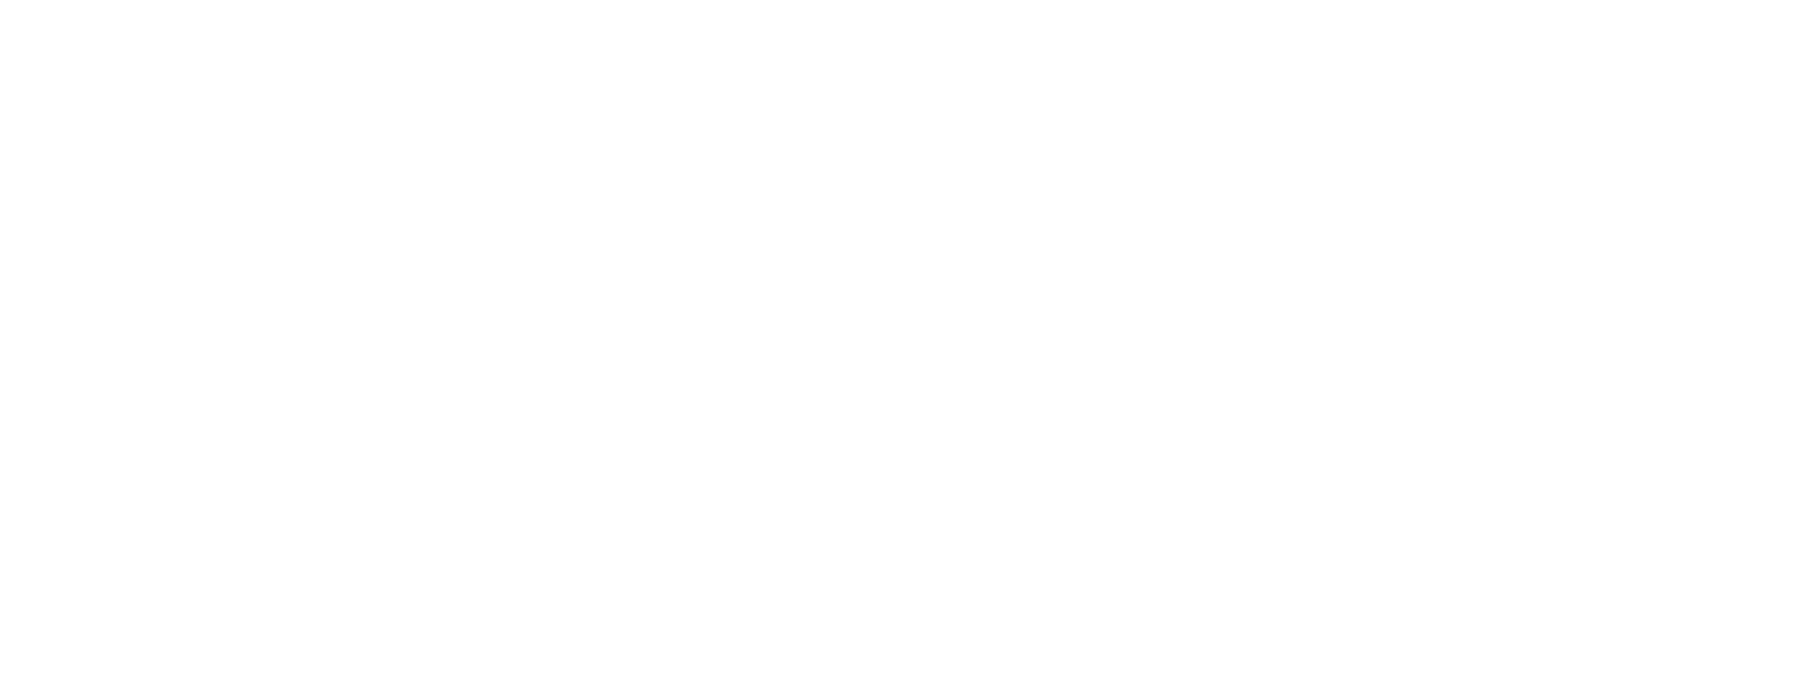 Ivy Wallet Horizontal